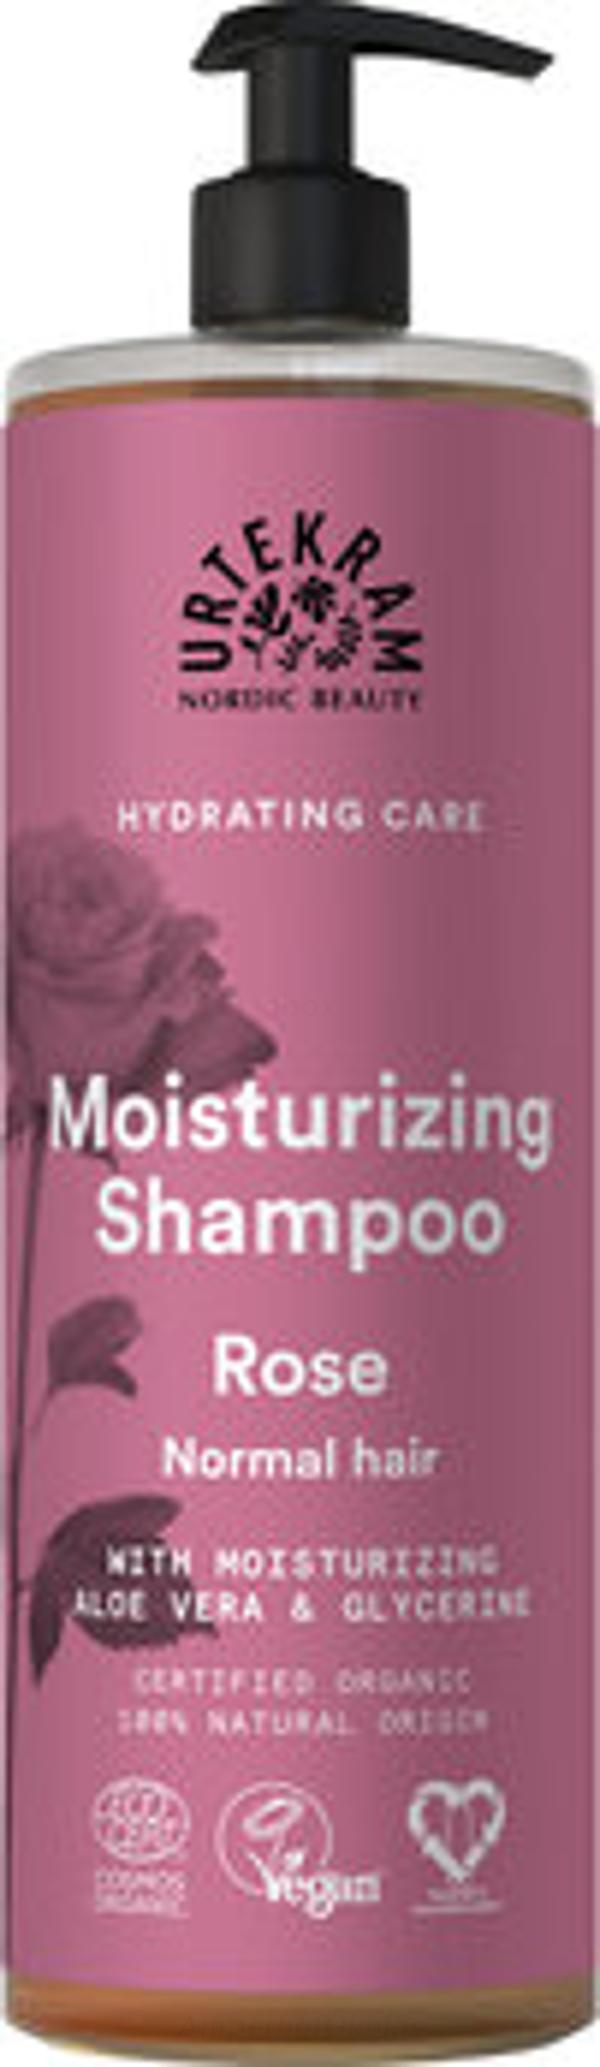 Produktfoto zu Shampoo Rose 1 l